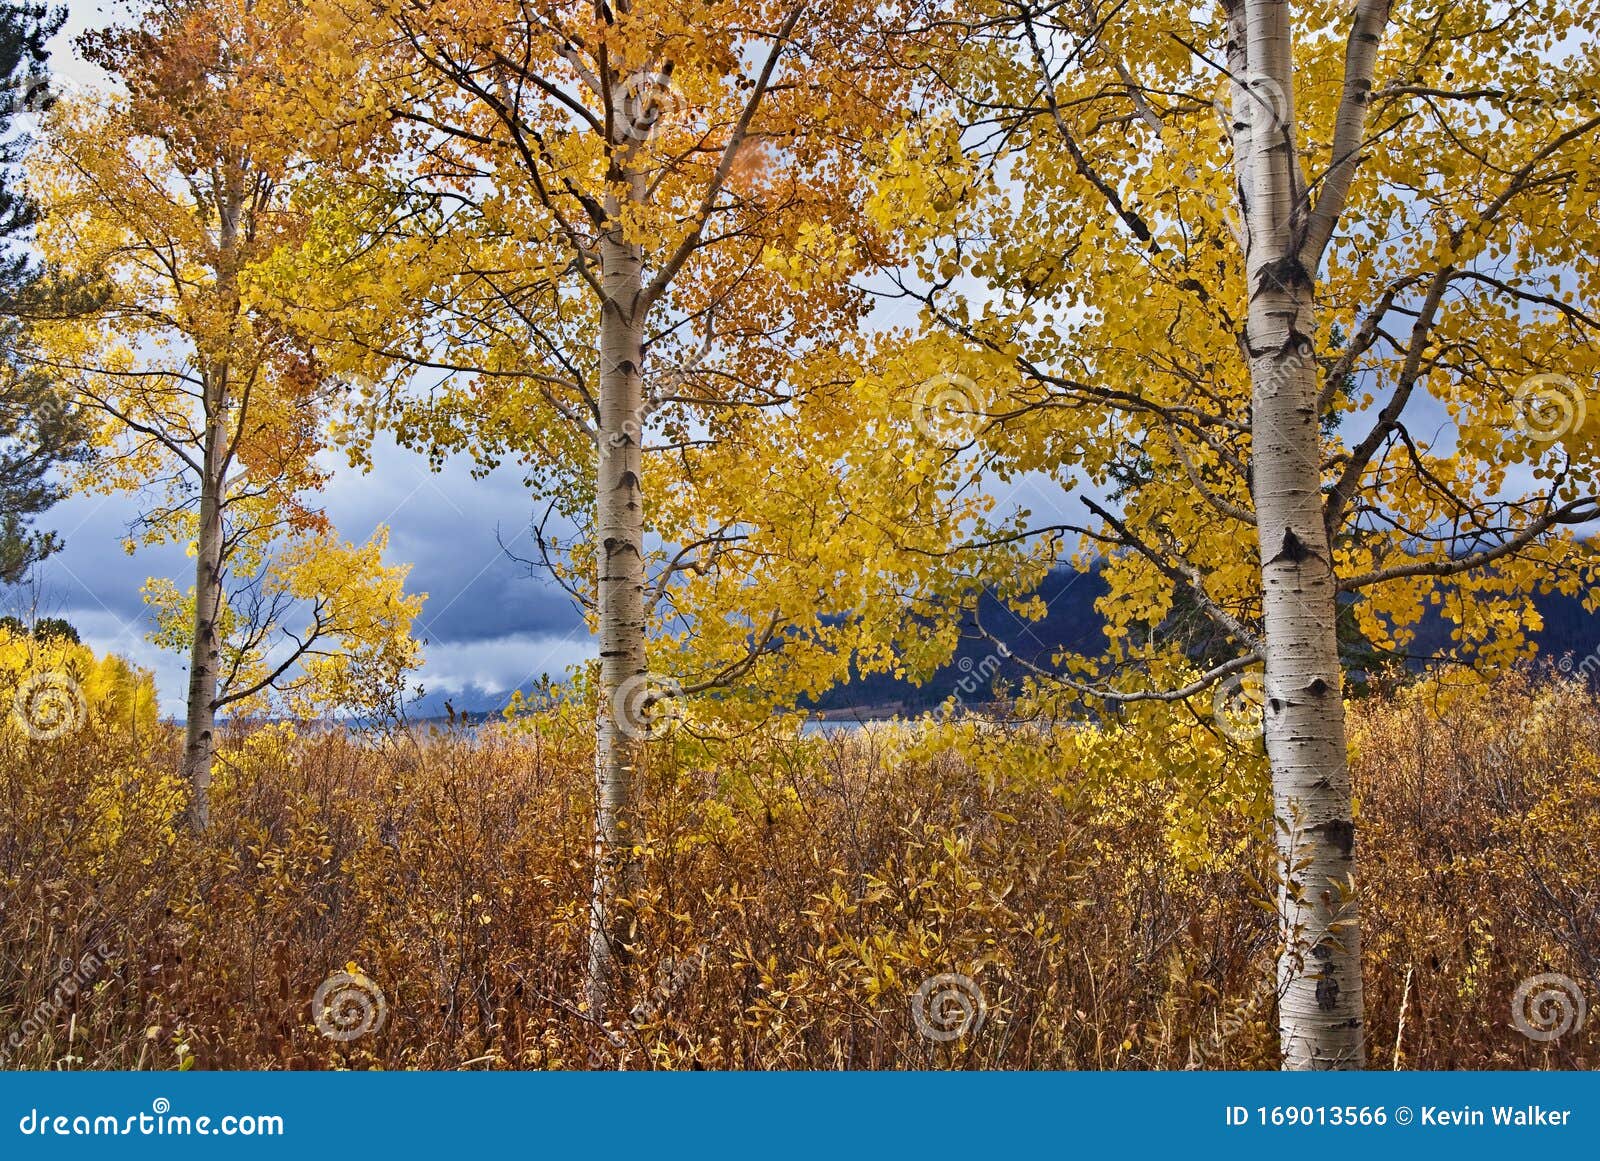 White Barked Quaking Aspen Trees Under Autumn Golden Leaves Stock Photo